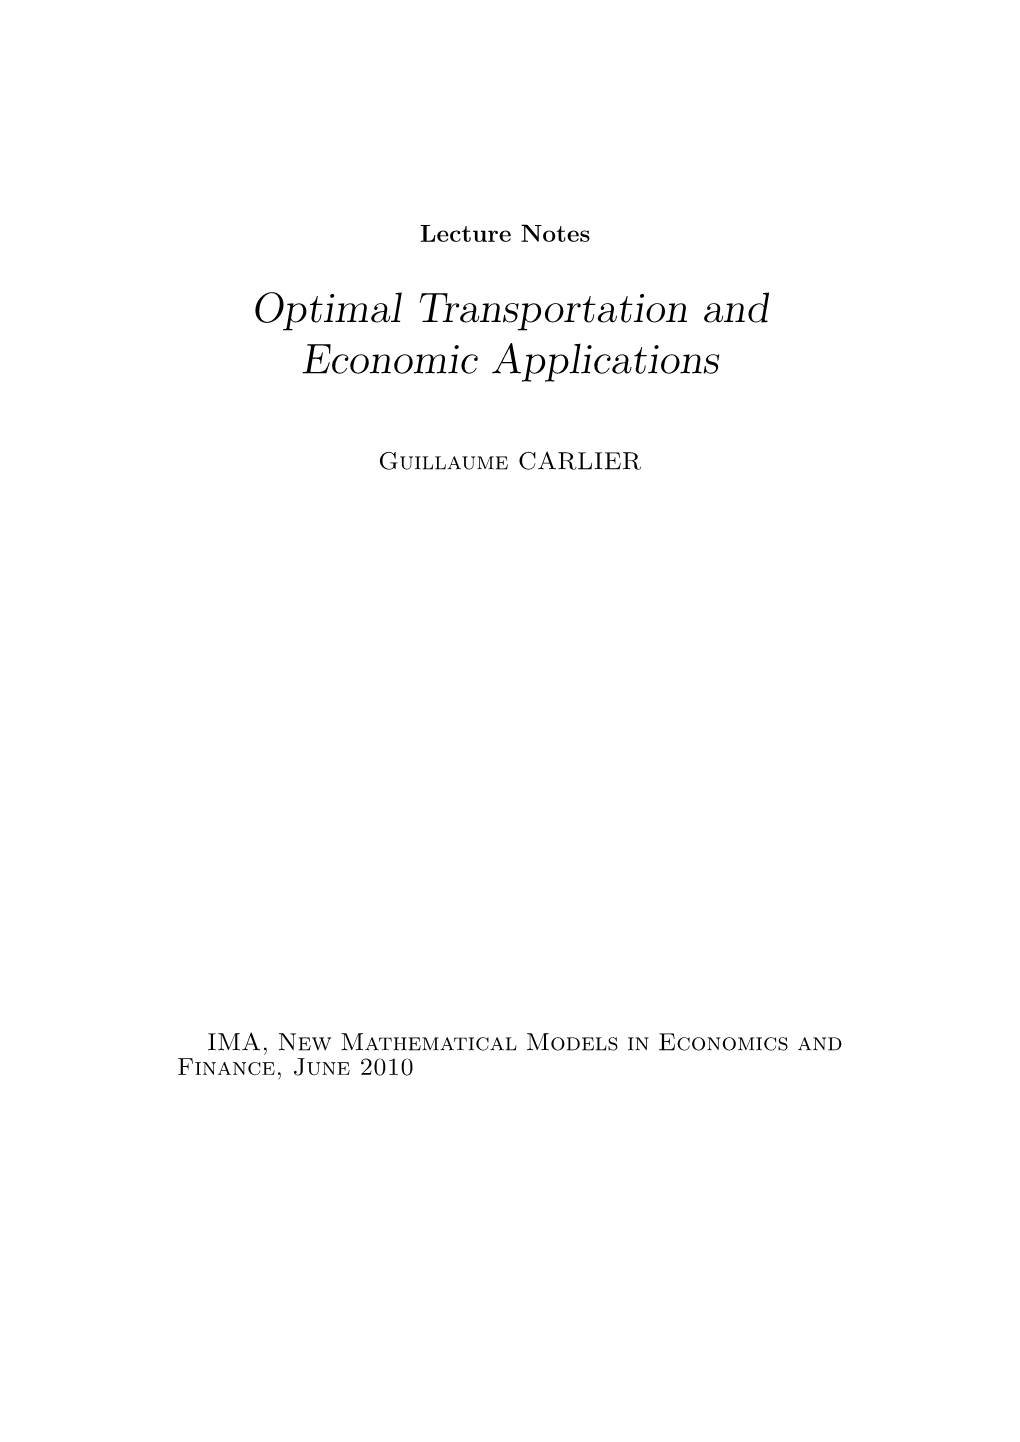 Optimal Transportation and Economic Applications